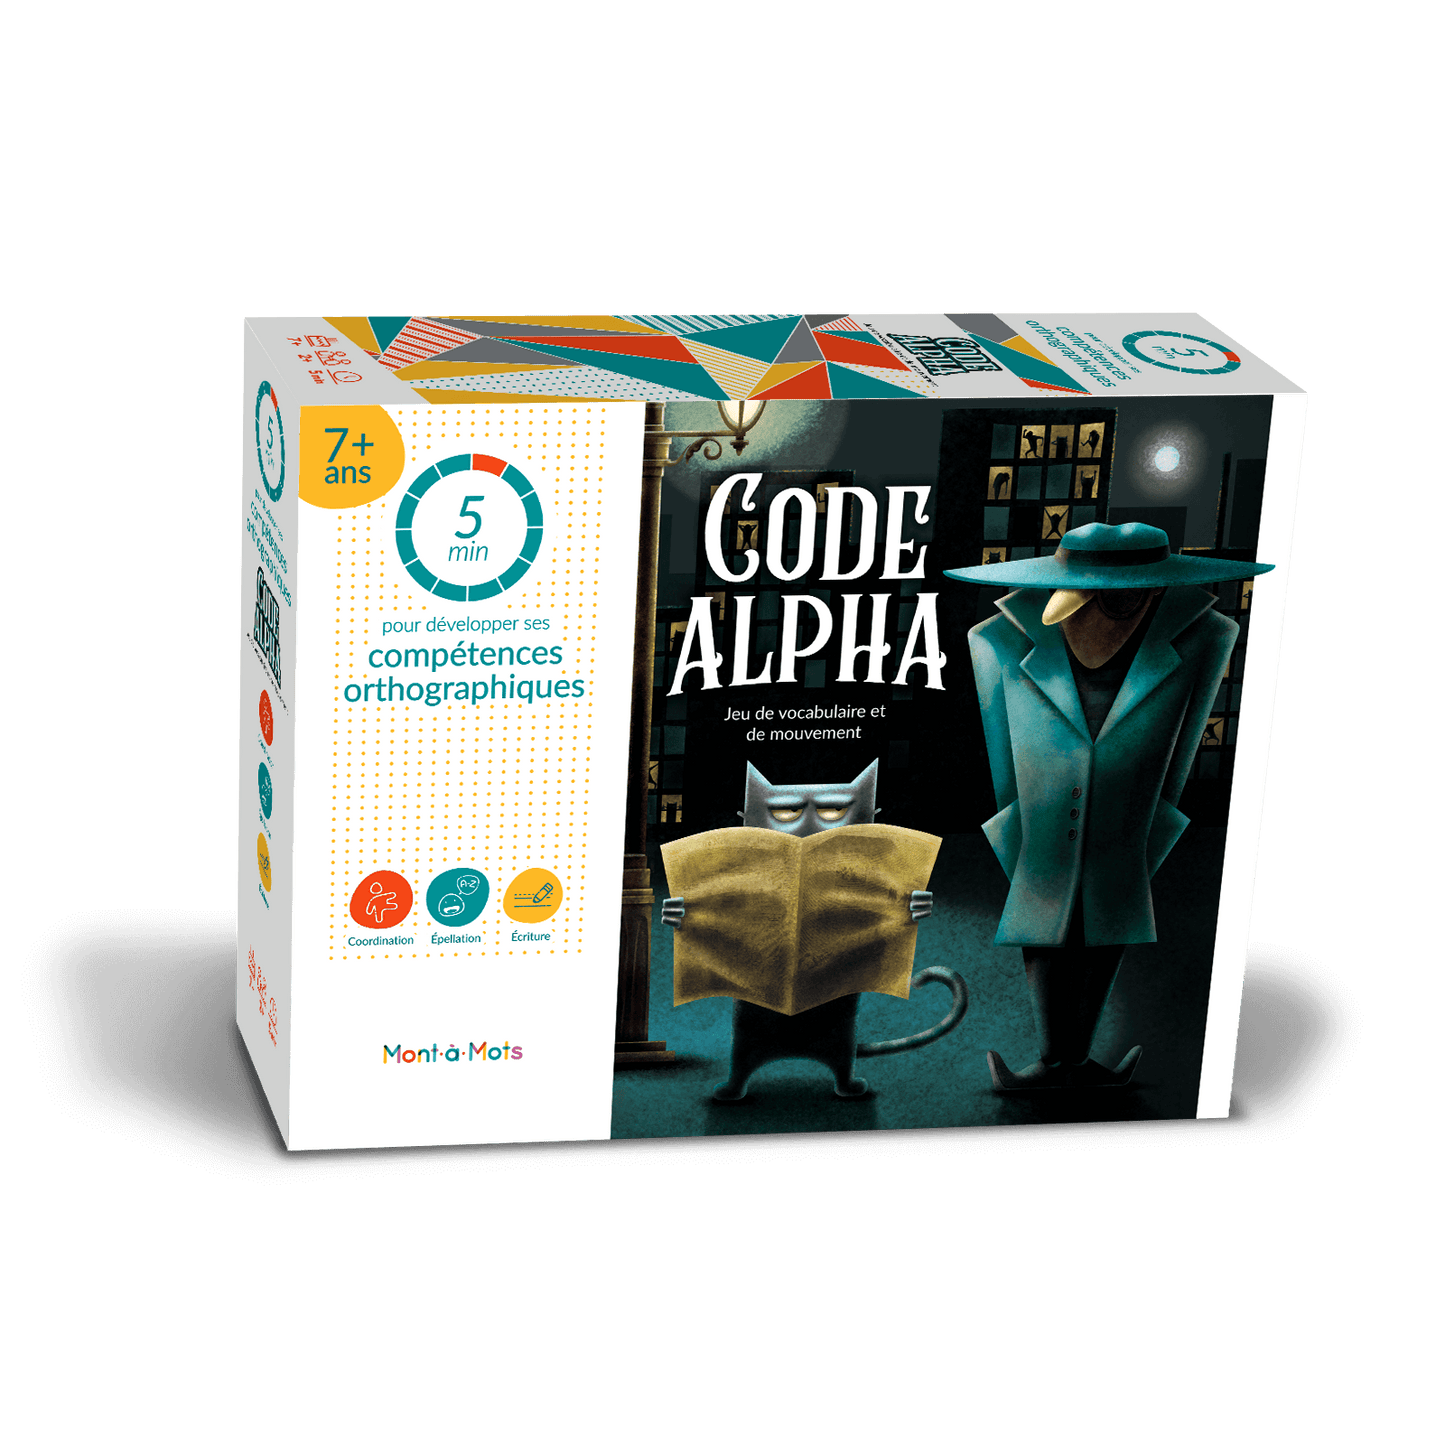 Code Alpha